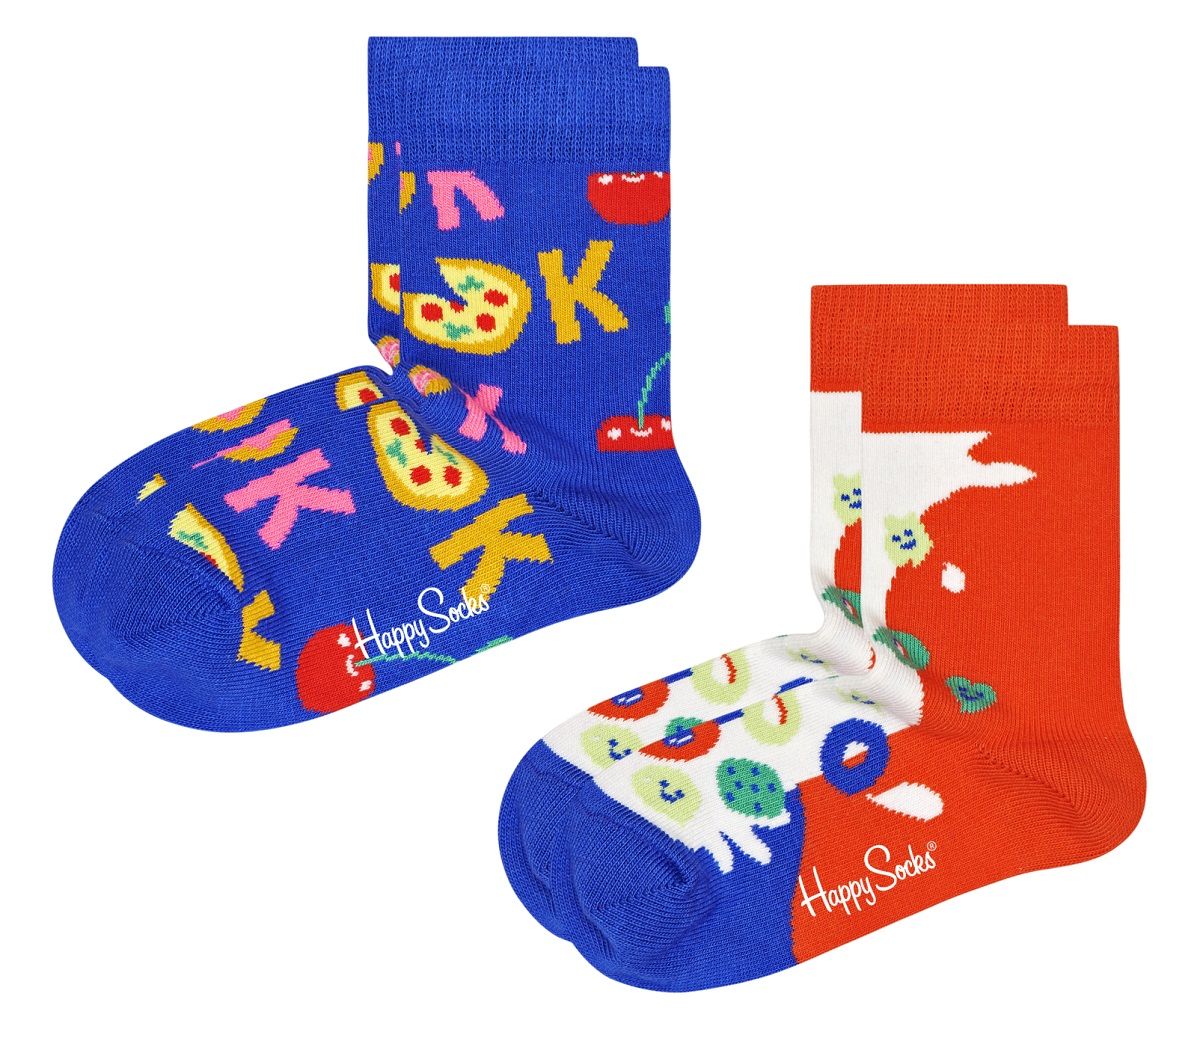 Набор из 2 пар детских носков 2-pack Kids Okay Cereals Socks.